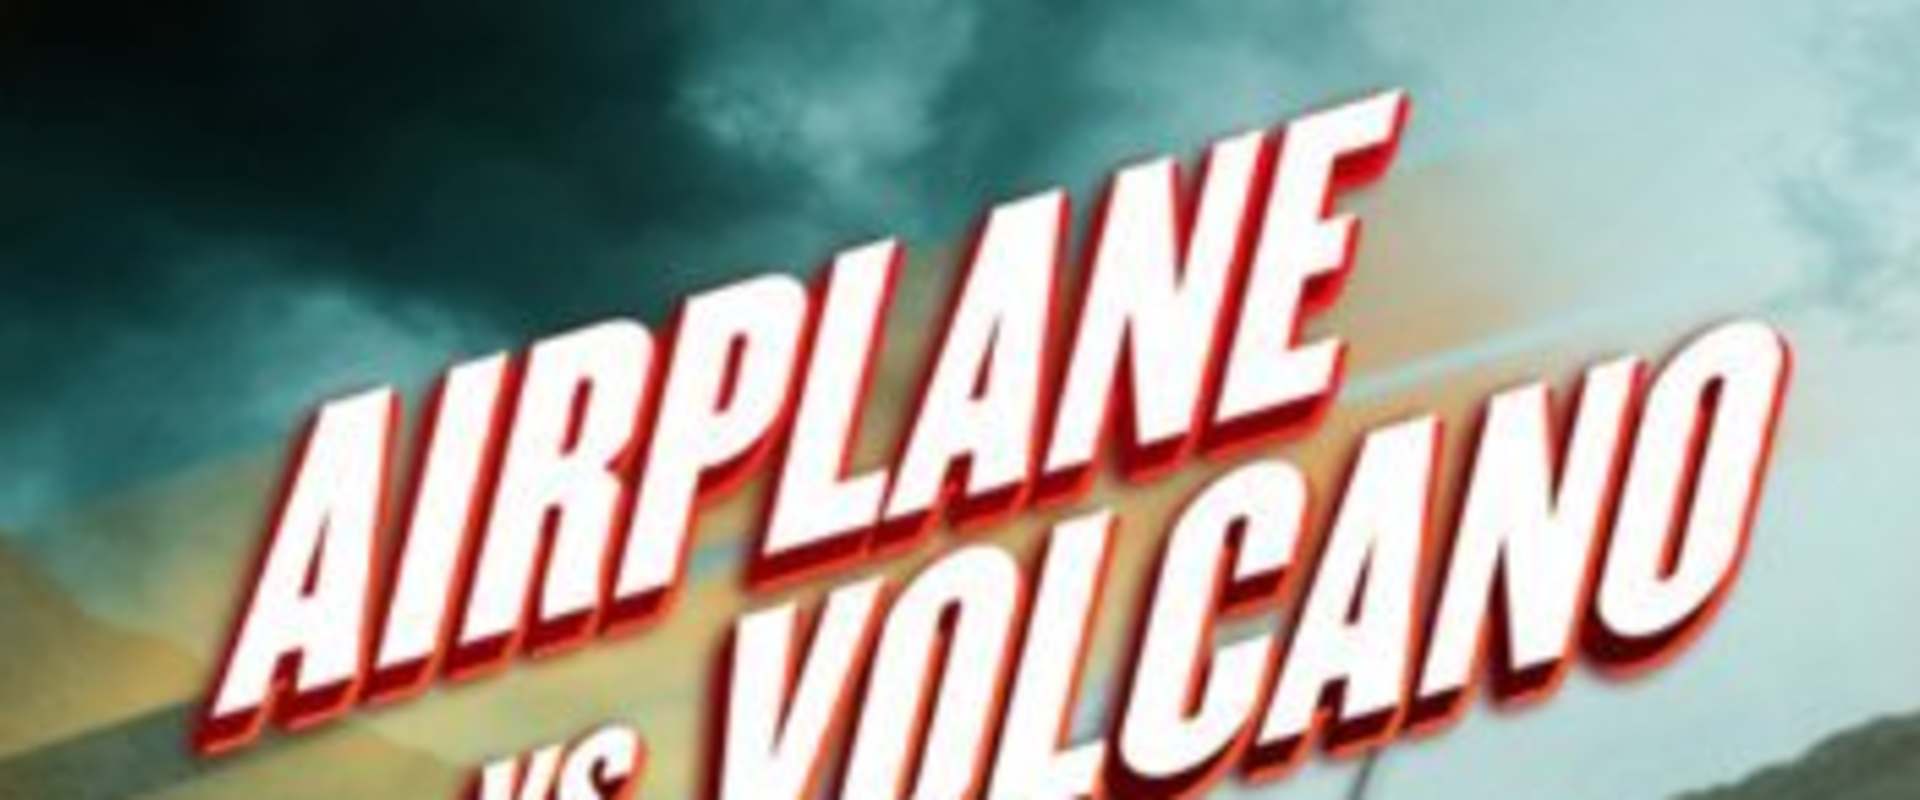 Airplane vs. Volcano background 2